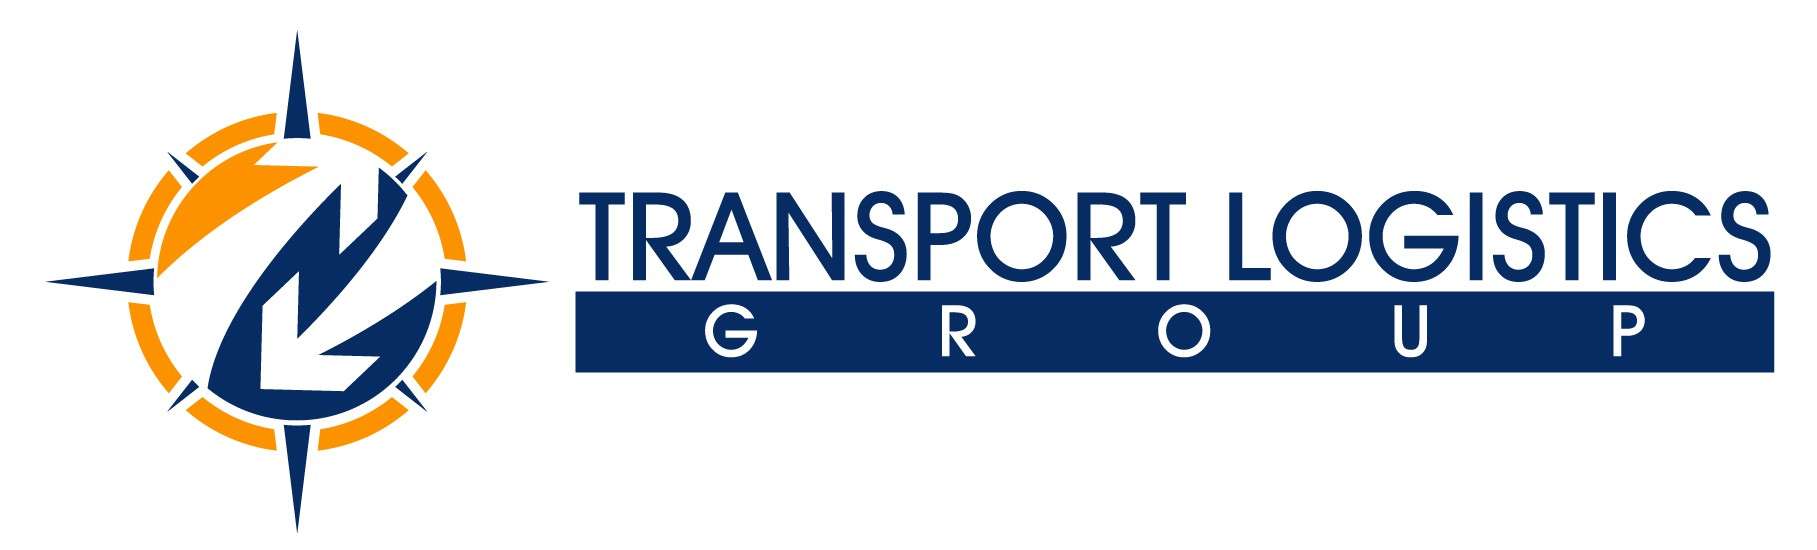 Transport Logistics Group, Inc. Logo